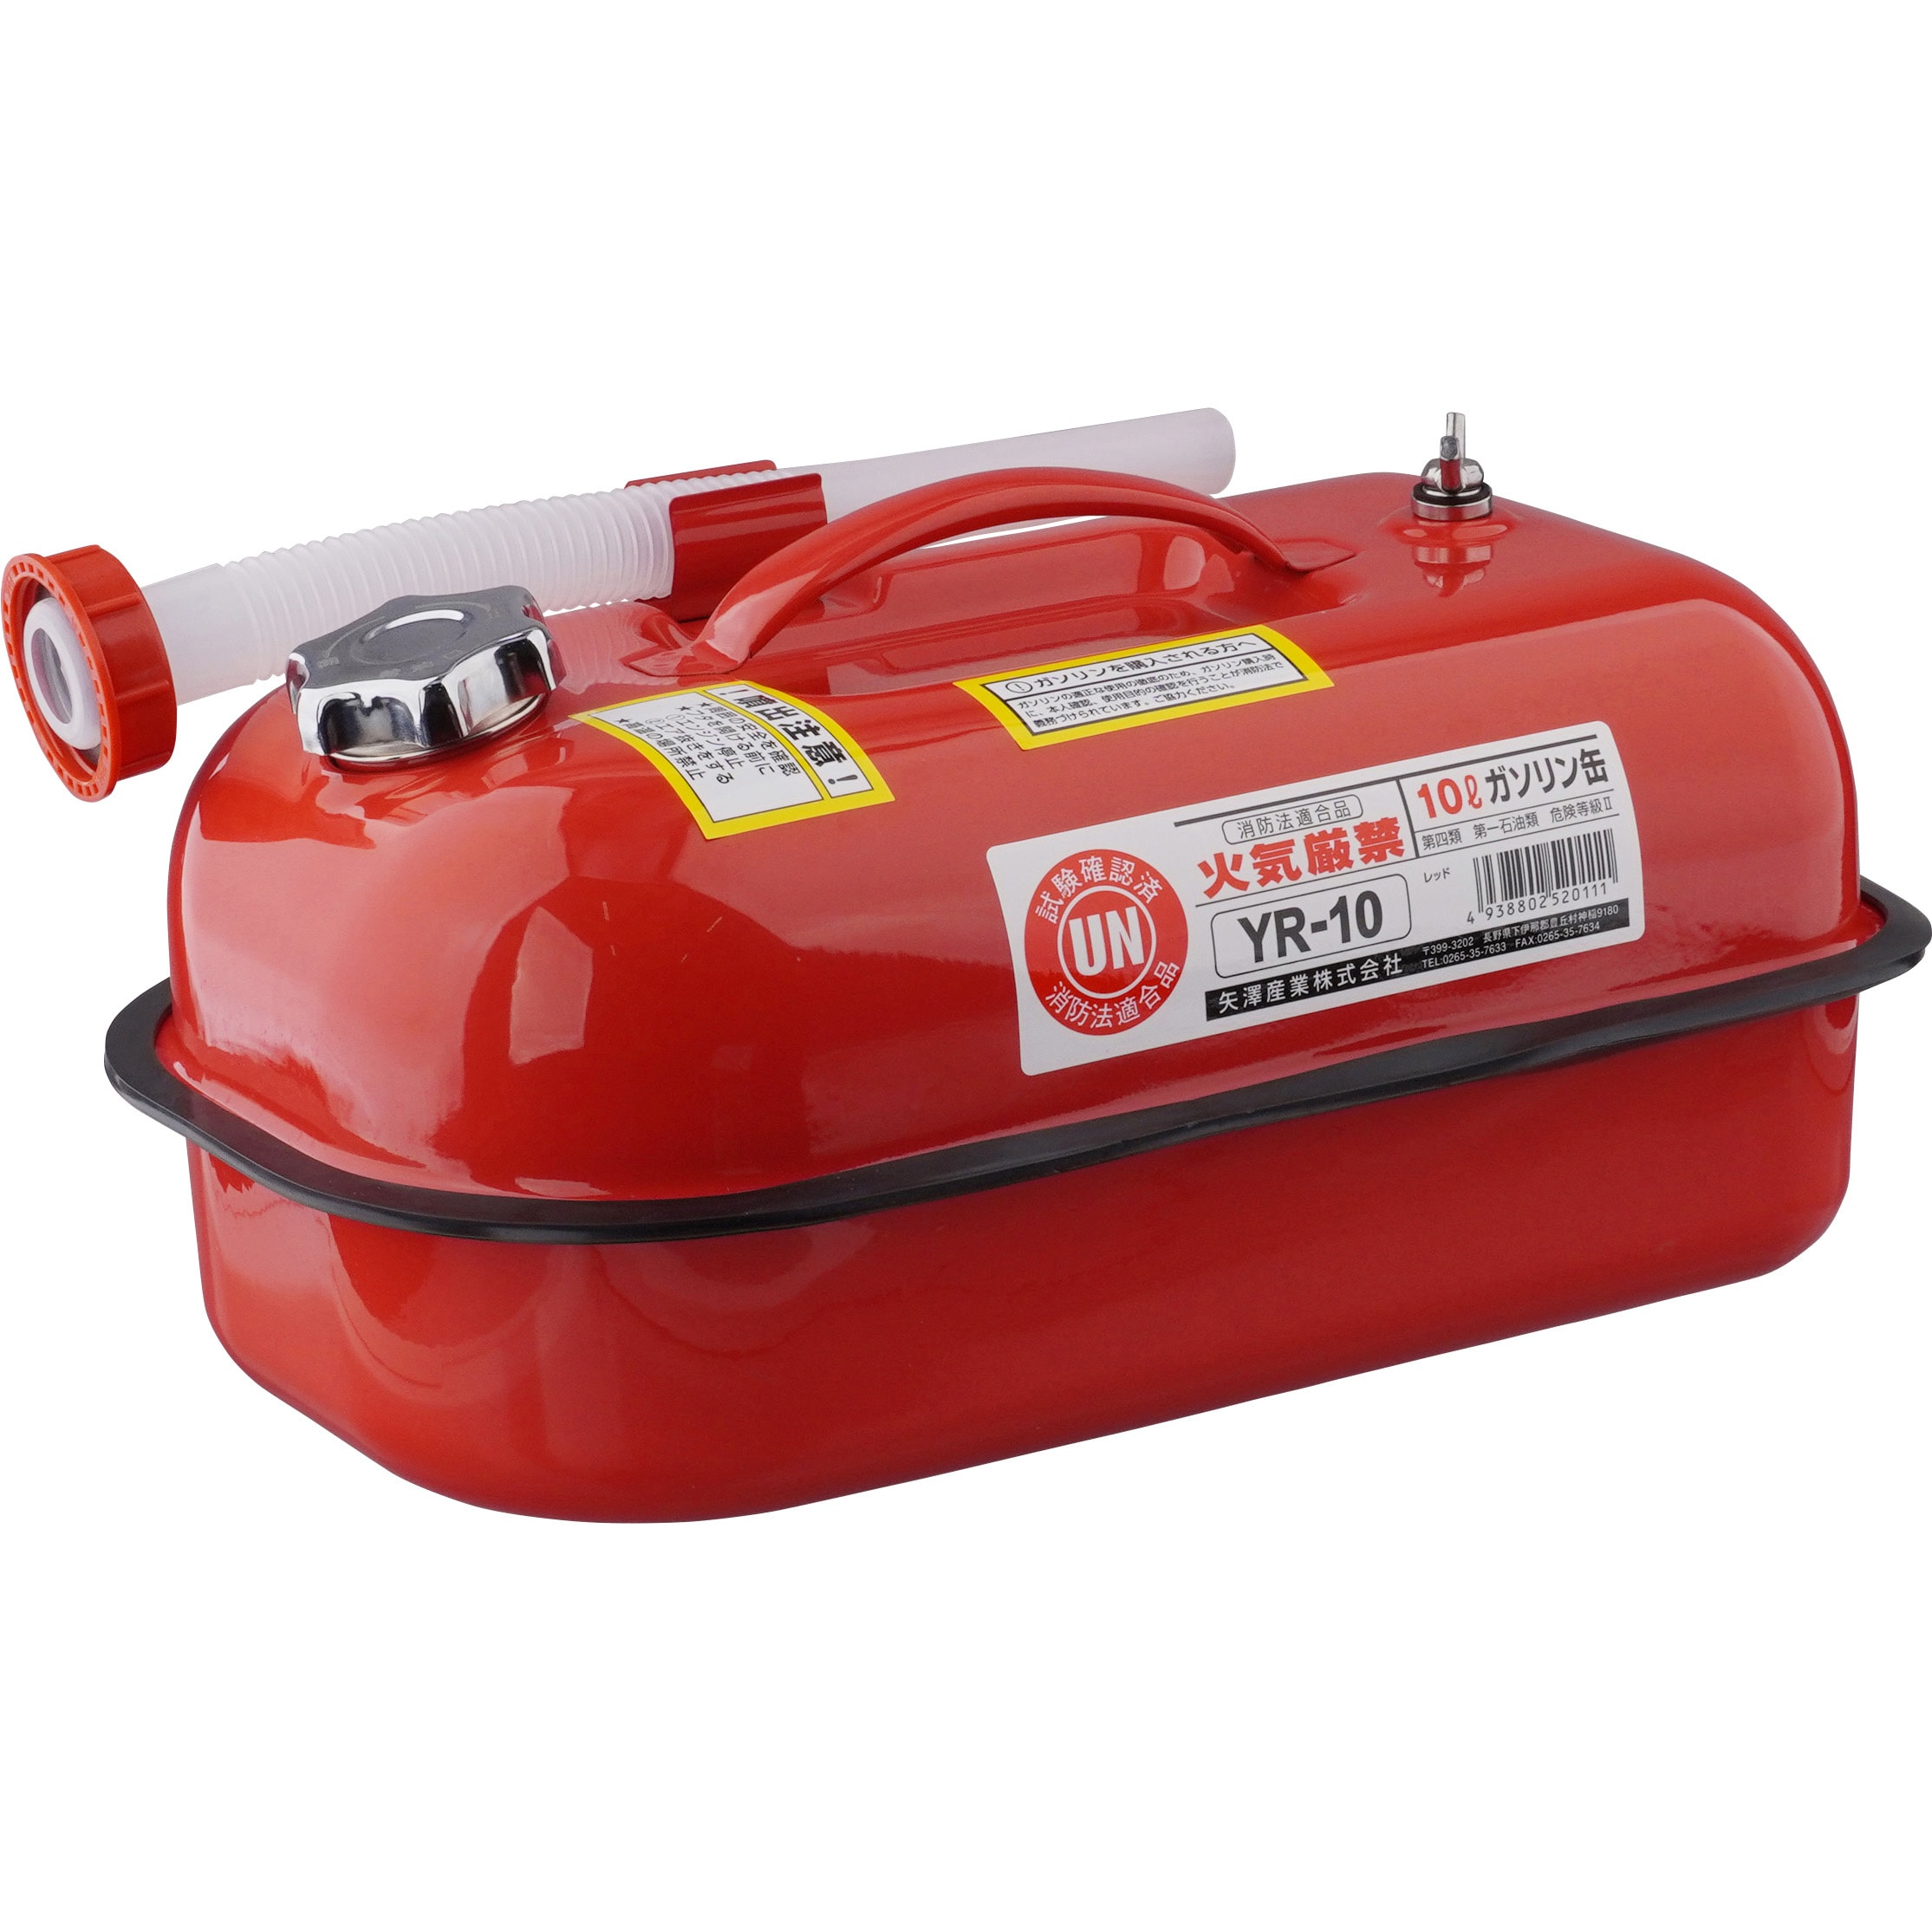 年末年始大決算 ガレージ ゼロ ガソリン携行缶 横型 赤 5L GZKK01 UN規格 消防法適合品 携行缶